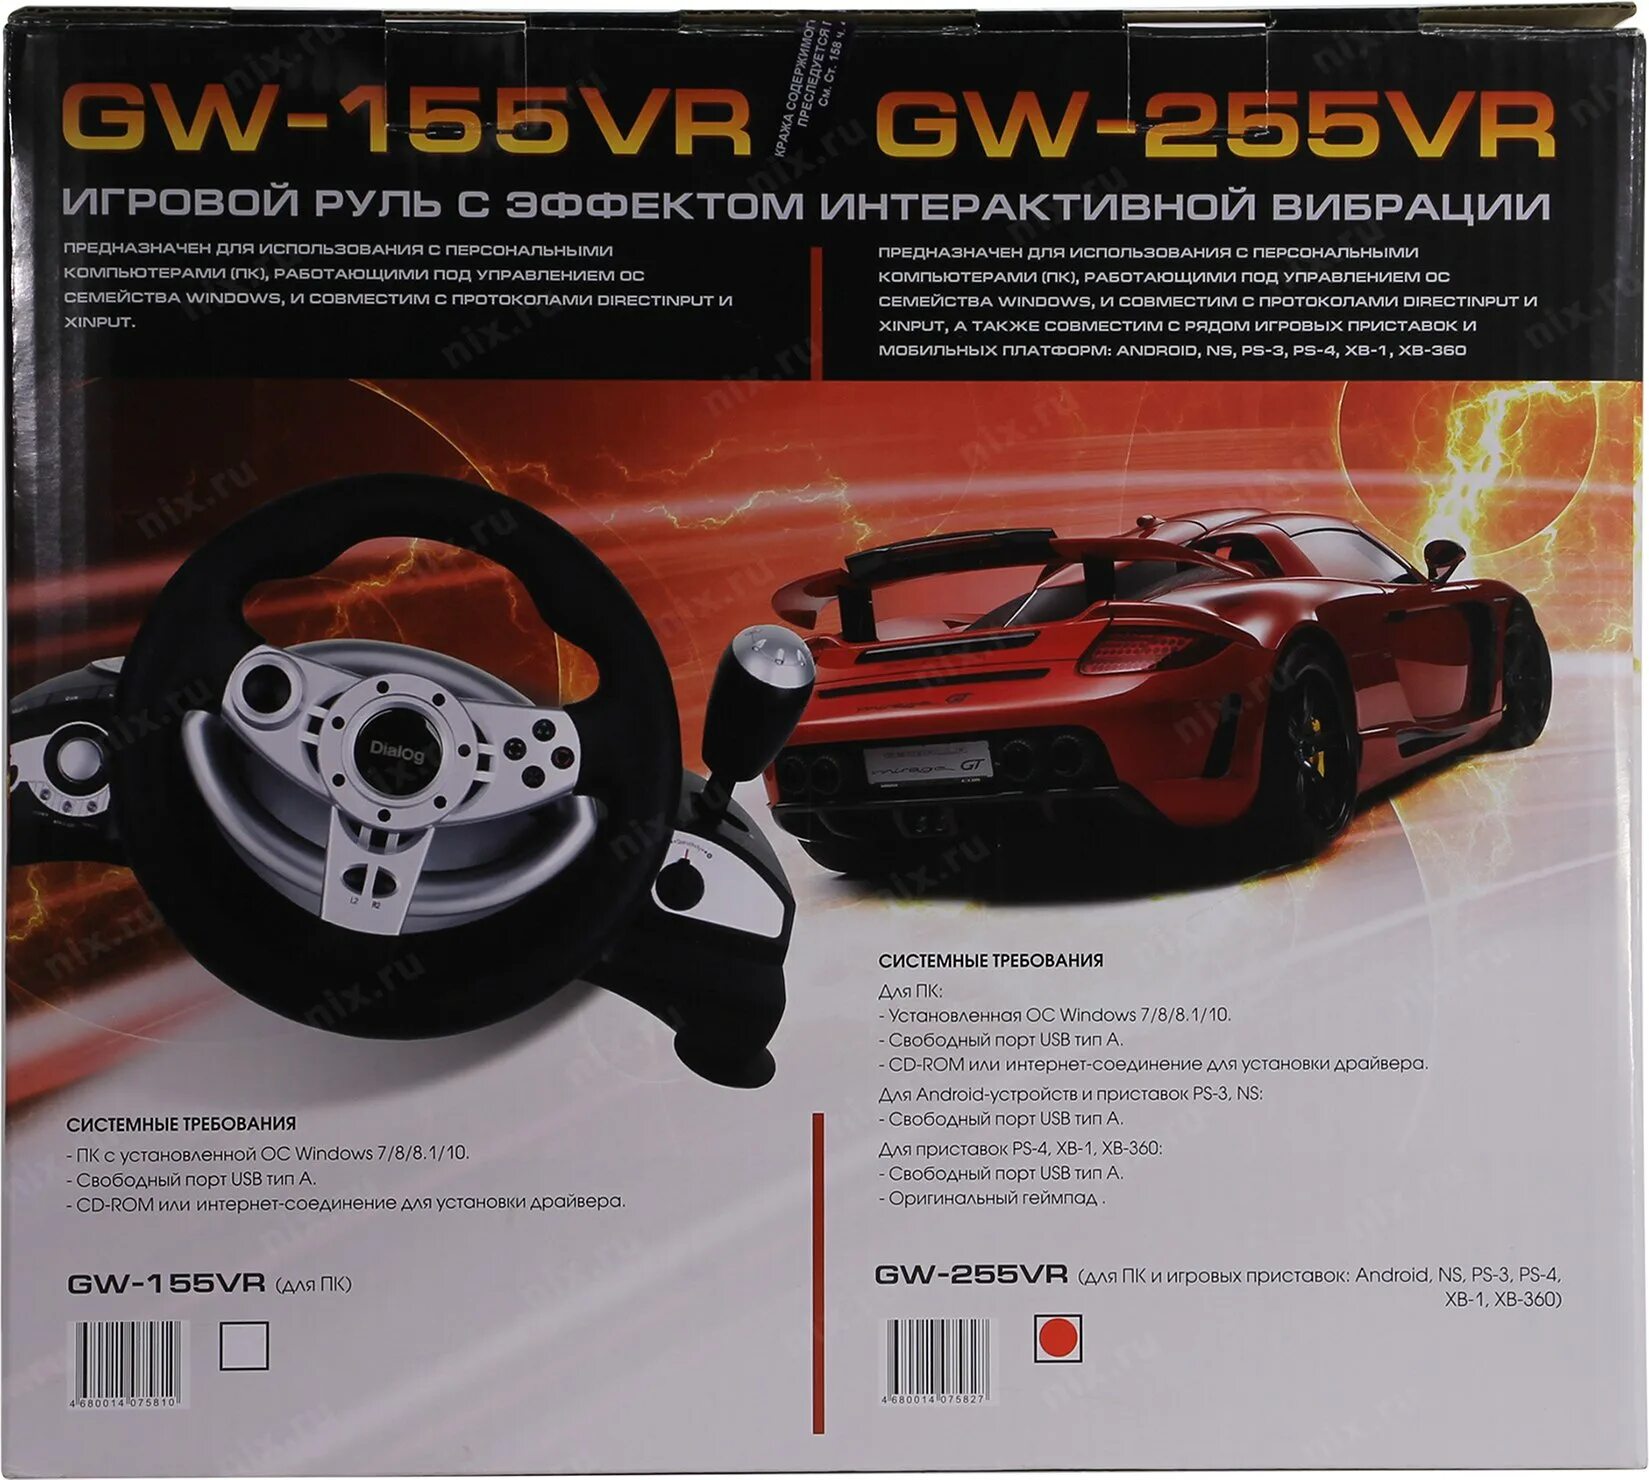 Руль dialog GW 155 VR Cyber Pilot. Руль dialog Cyberpilot GW-155vr. Игровой руль dialog GW 255vr. Руль диалог GW 155 VR. Dialog 155vr